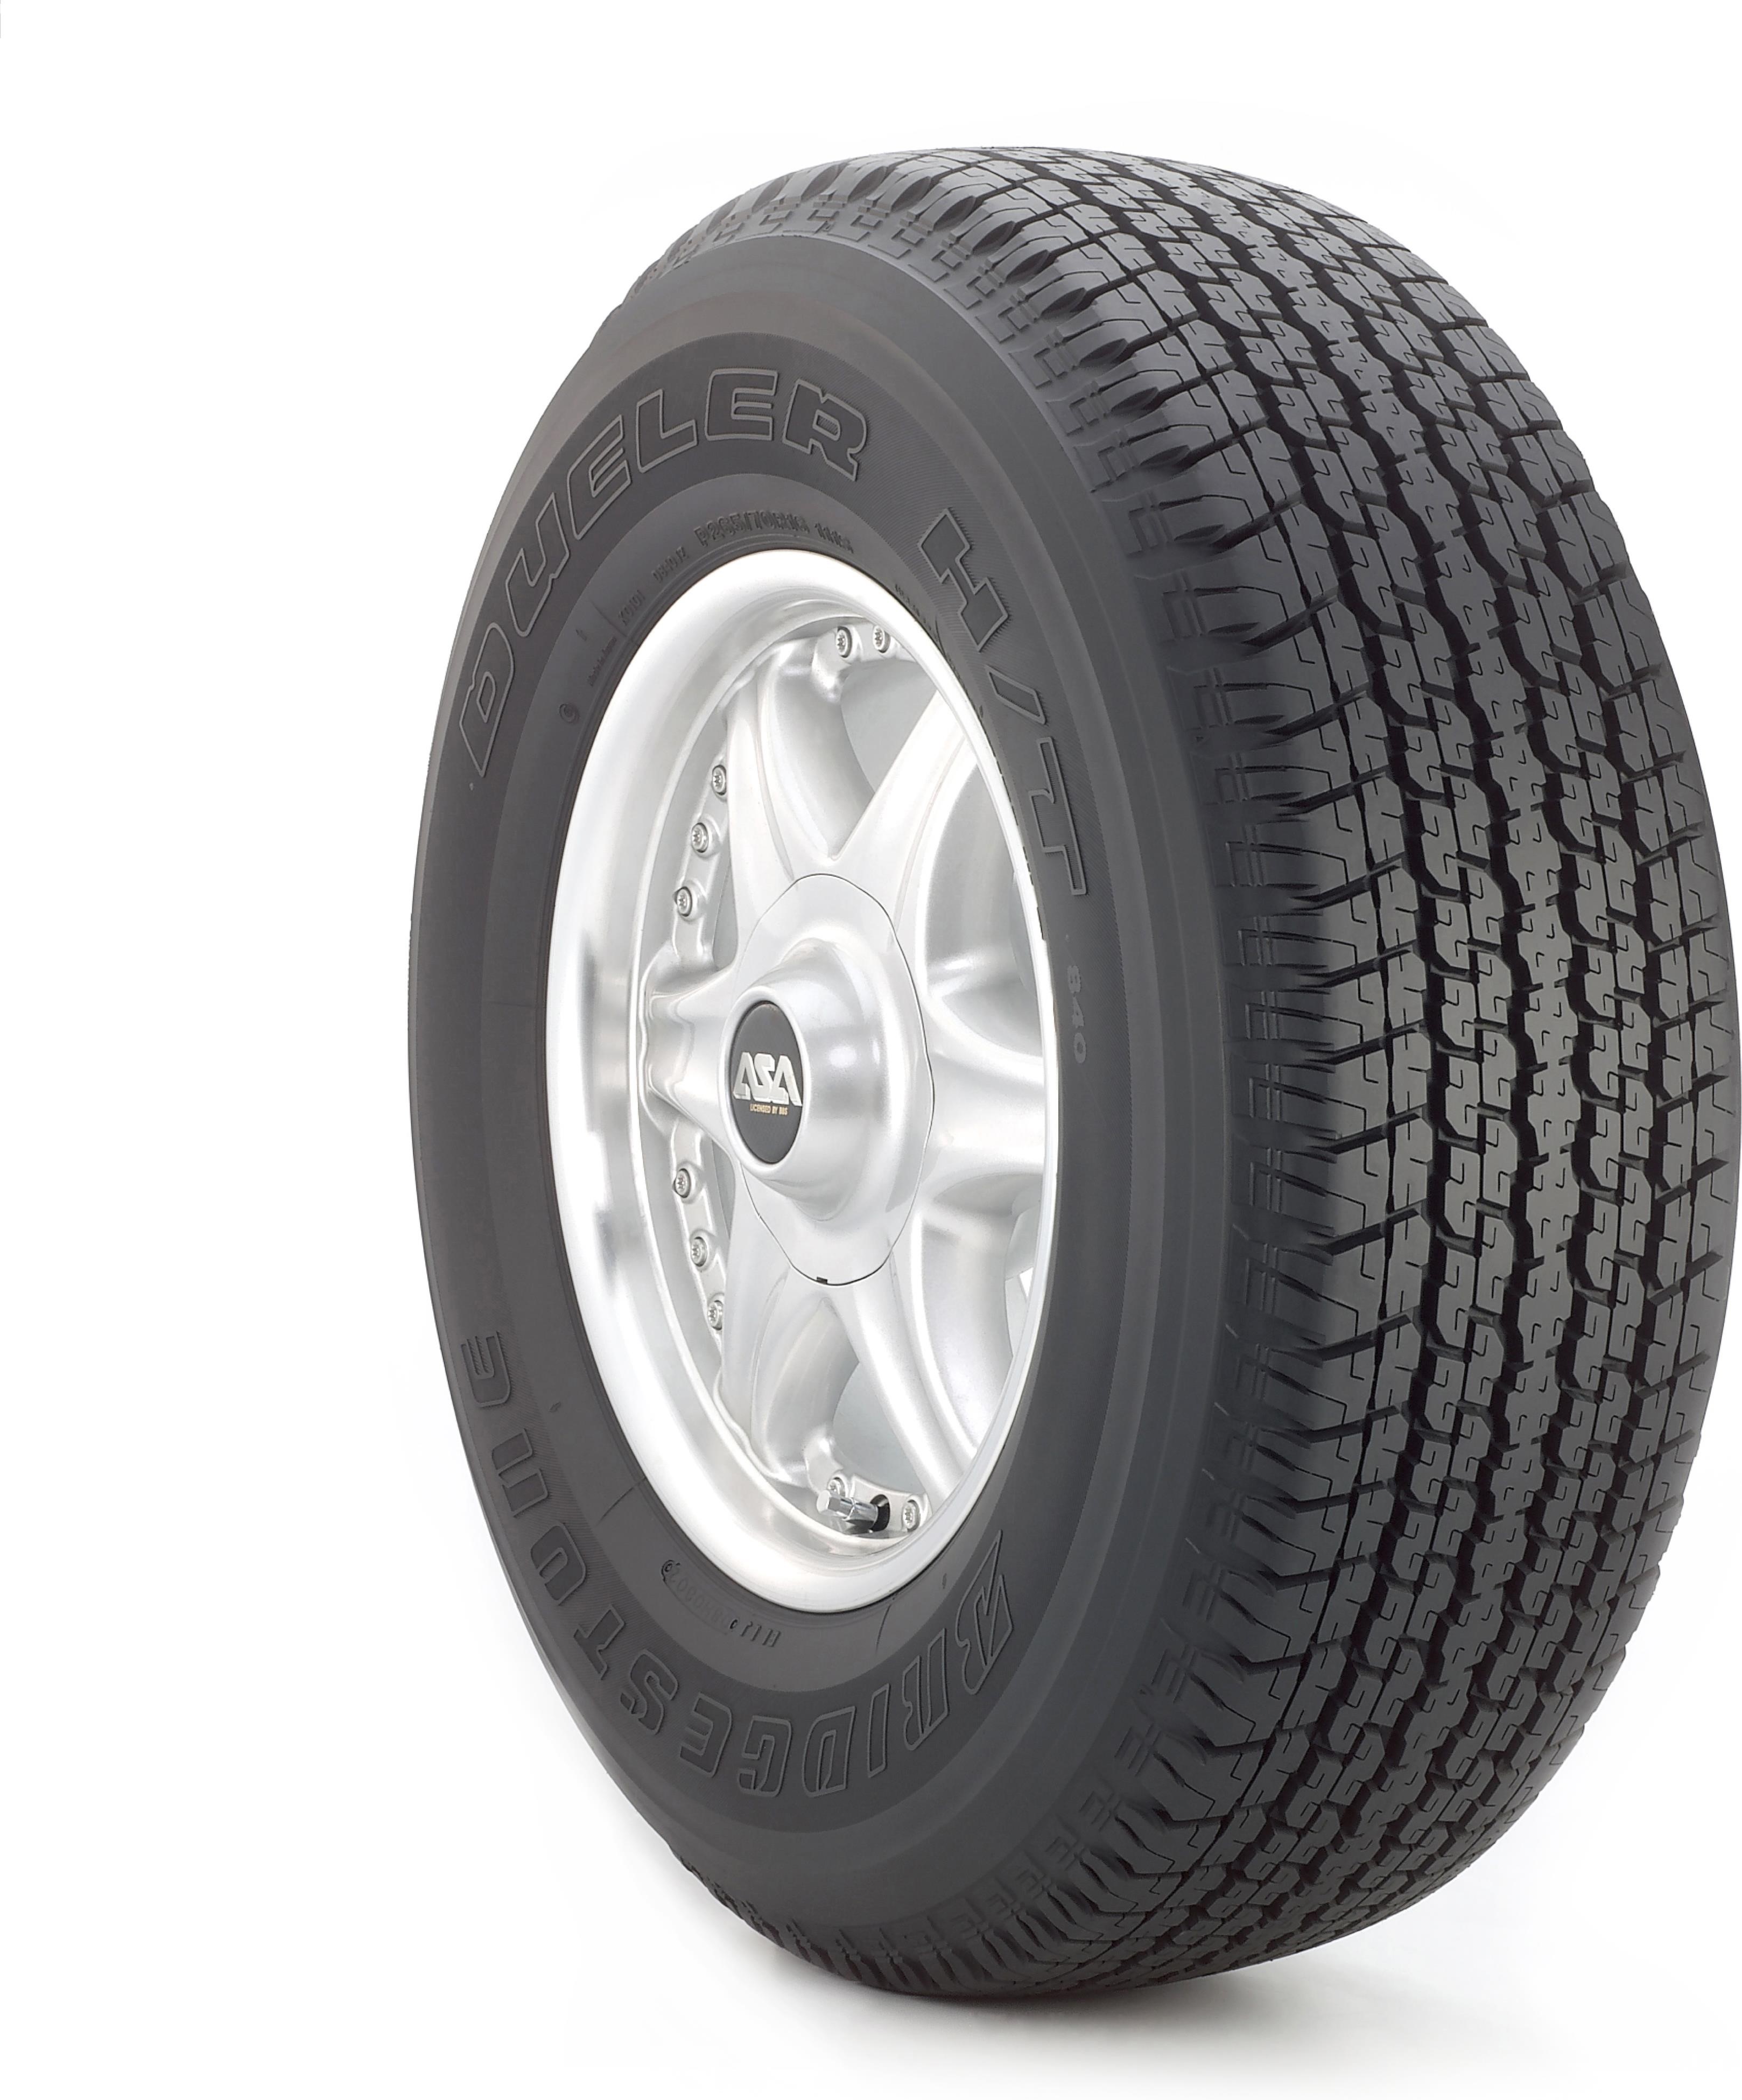 Bridgestone Dueler HT 840 255/70R18 113S BL | Best One Tire